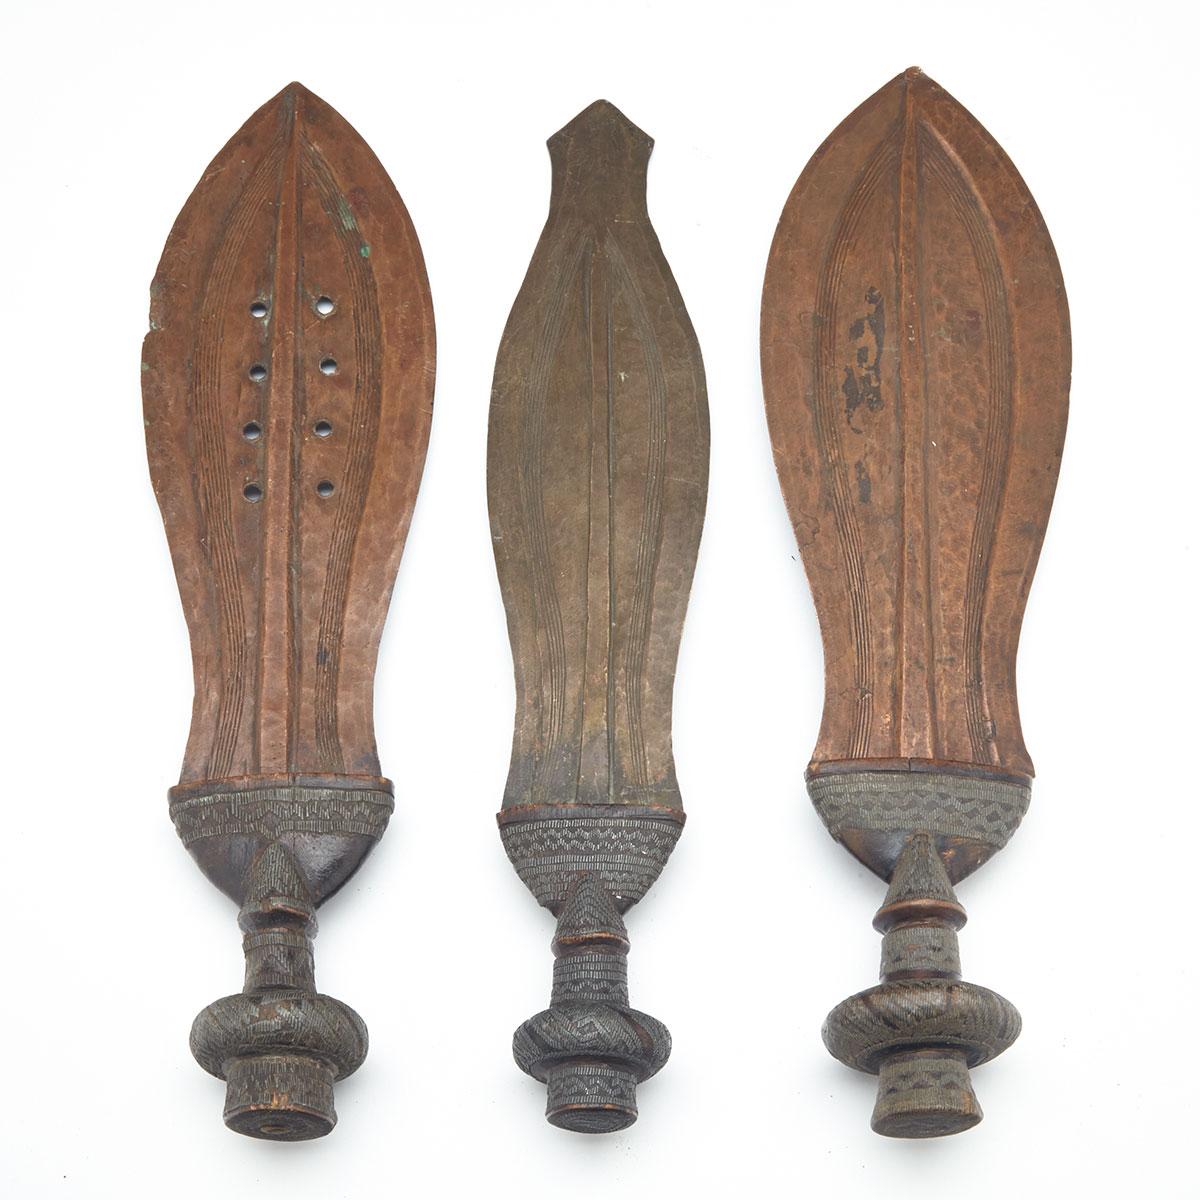 Three African Kuba Ceremonial Prestige Knives (Ikula), early 20th century